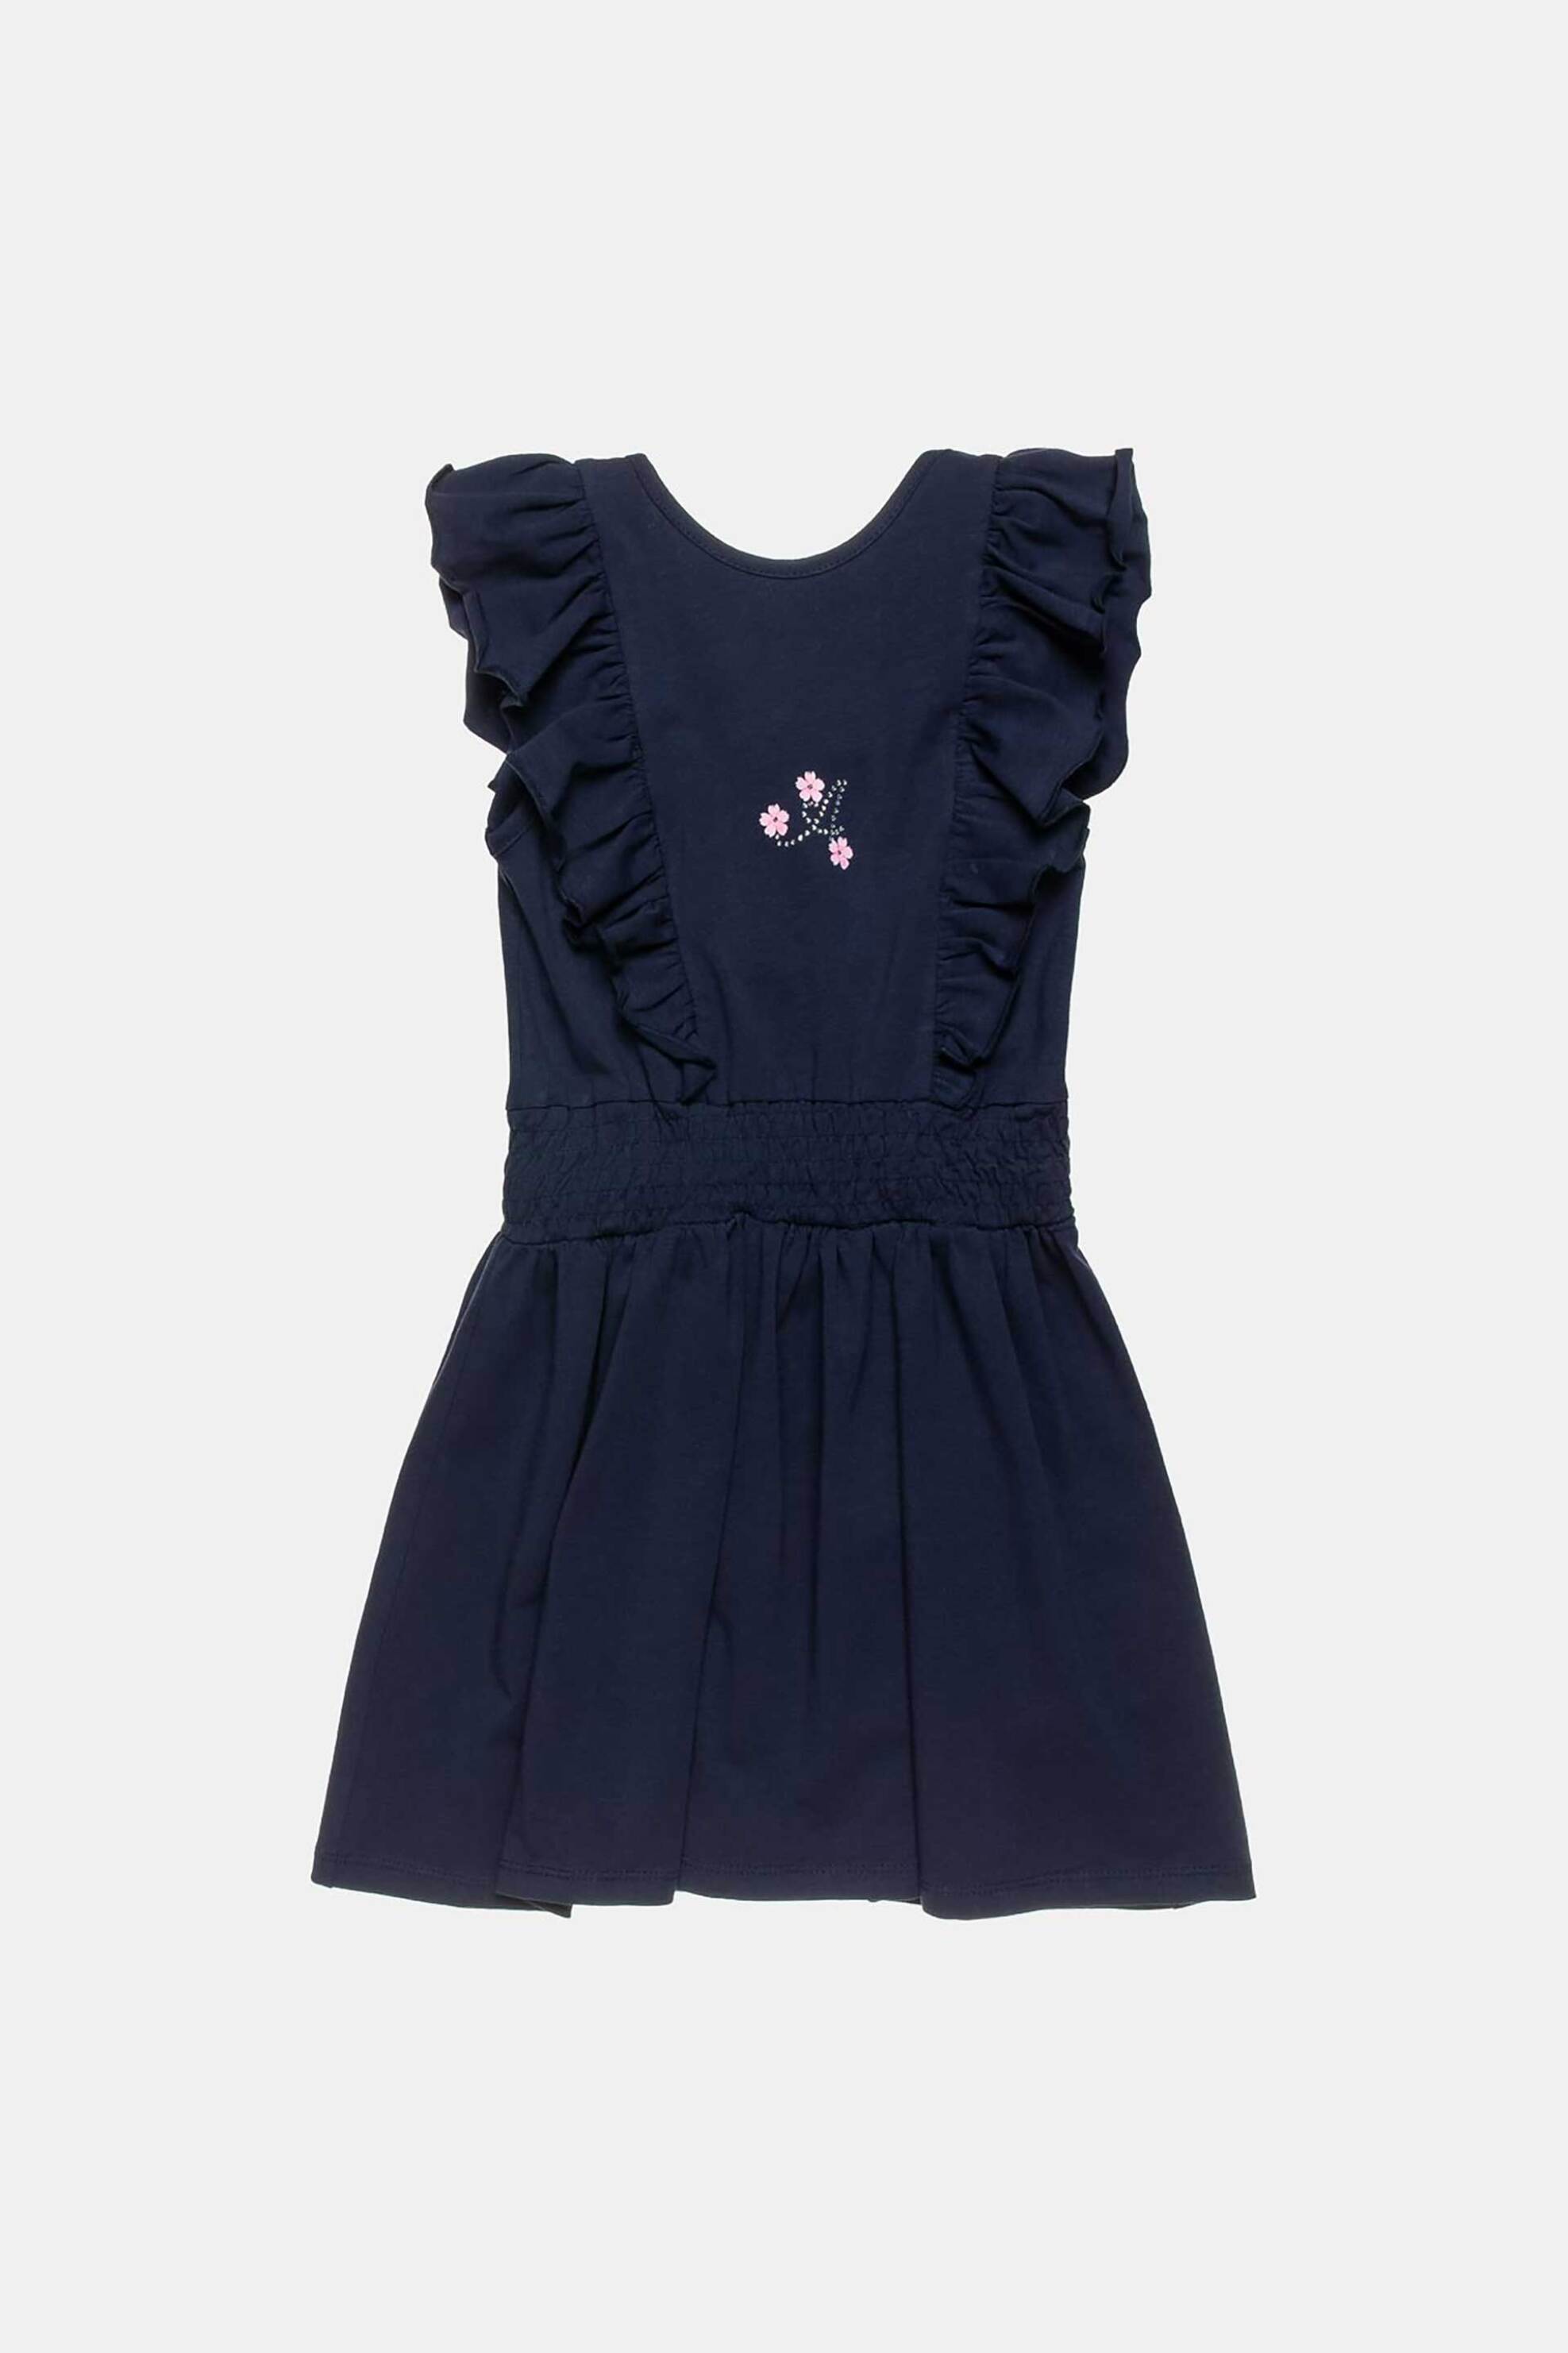 Alouette παιδικό βαμβακερό φόρεμα με βολάν και στρας - 00942065 Μπλε Σκούρο